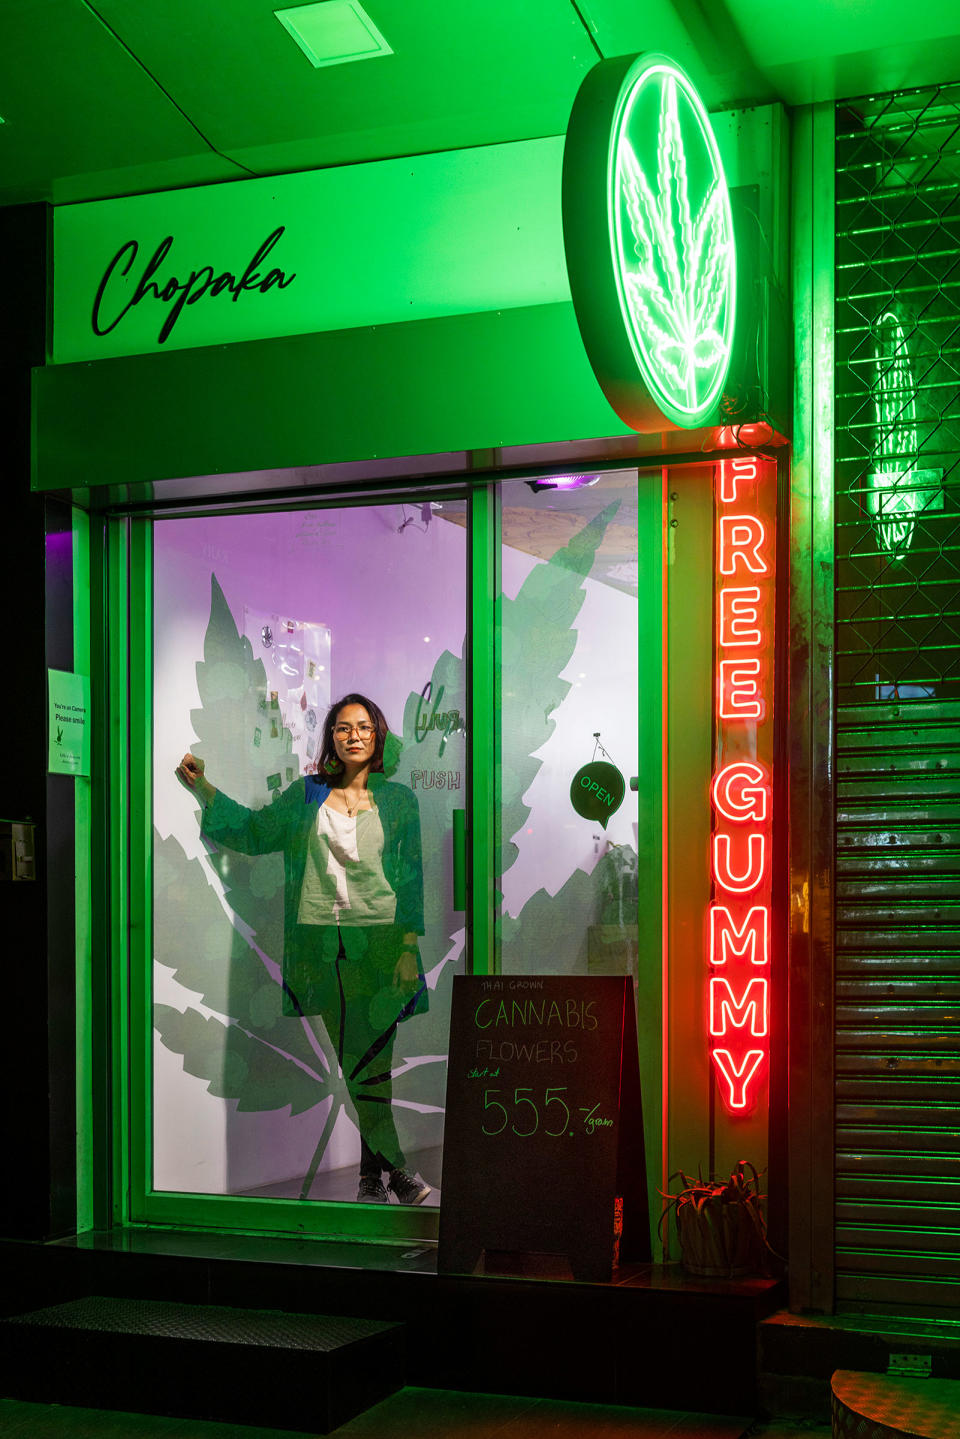 Chokwan “Kitty” Chopaka poses inside her cannabis dispensary on Bangkok’s Sukhumvit Road<span class="copyright">Cedric Arnold for TIME</span>